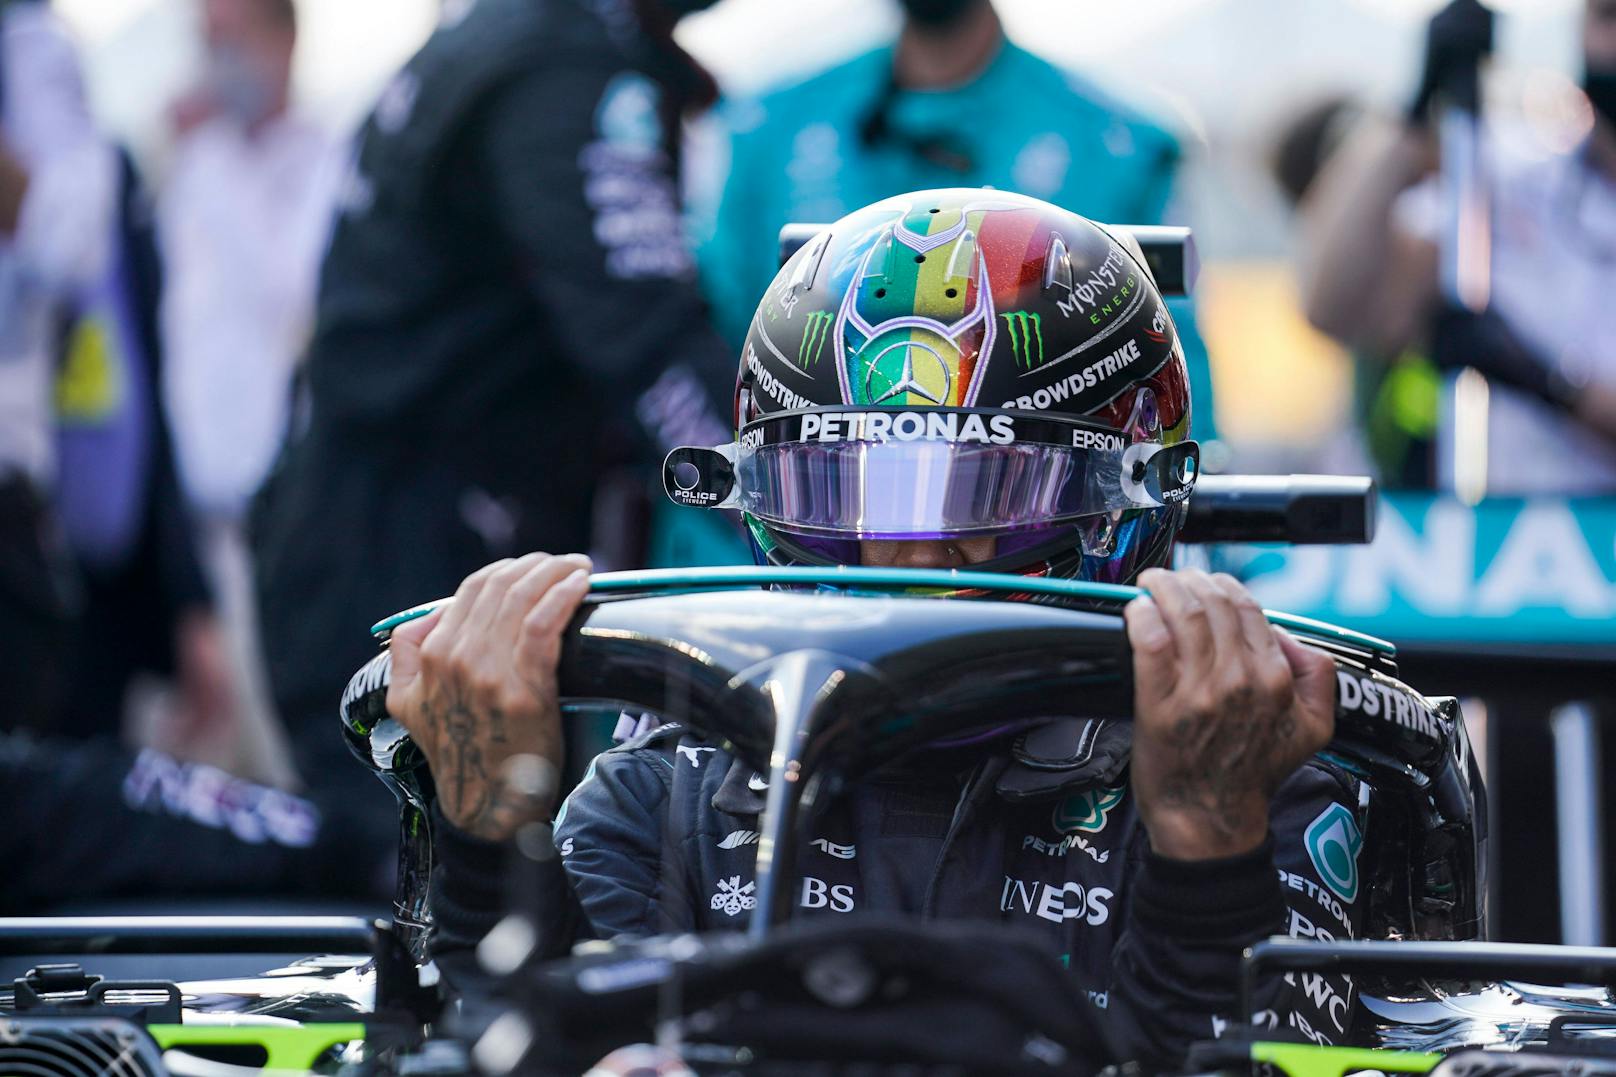 "Selbstmitleid!" Formel-1-Steward über Hamilton-Rückzug